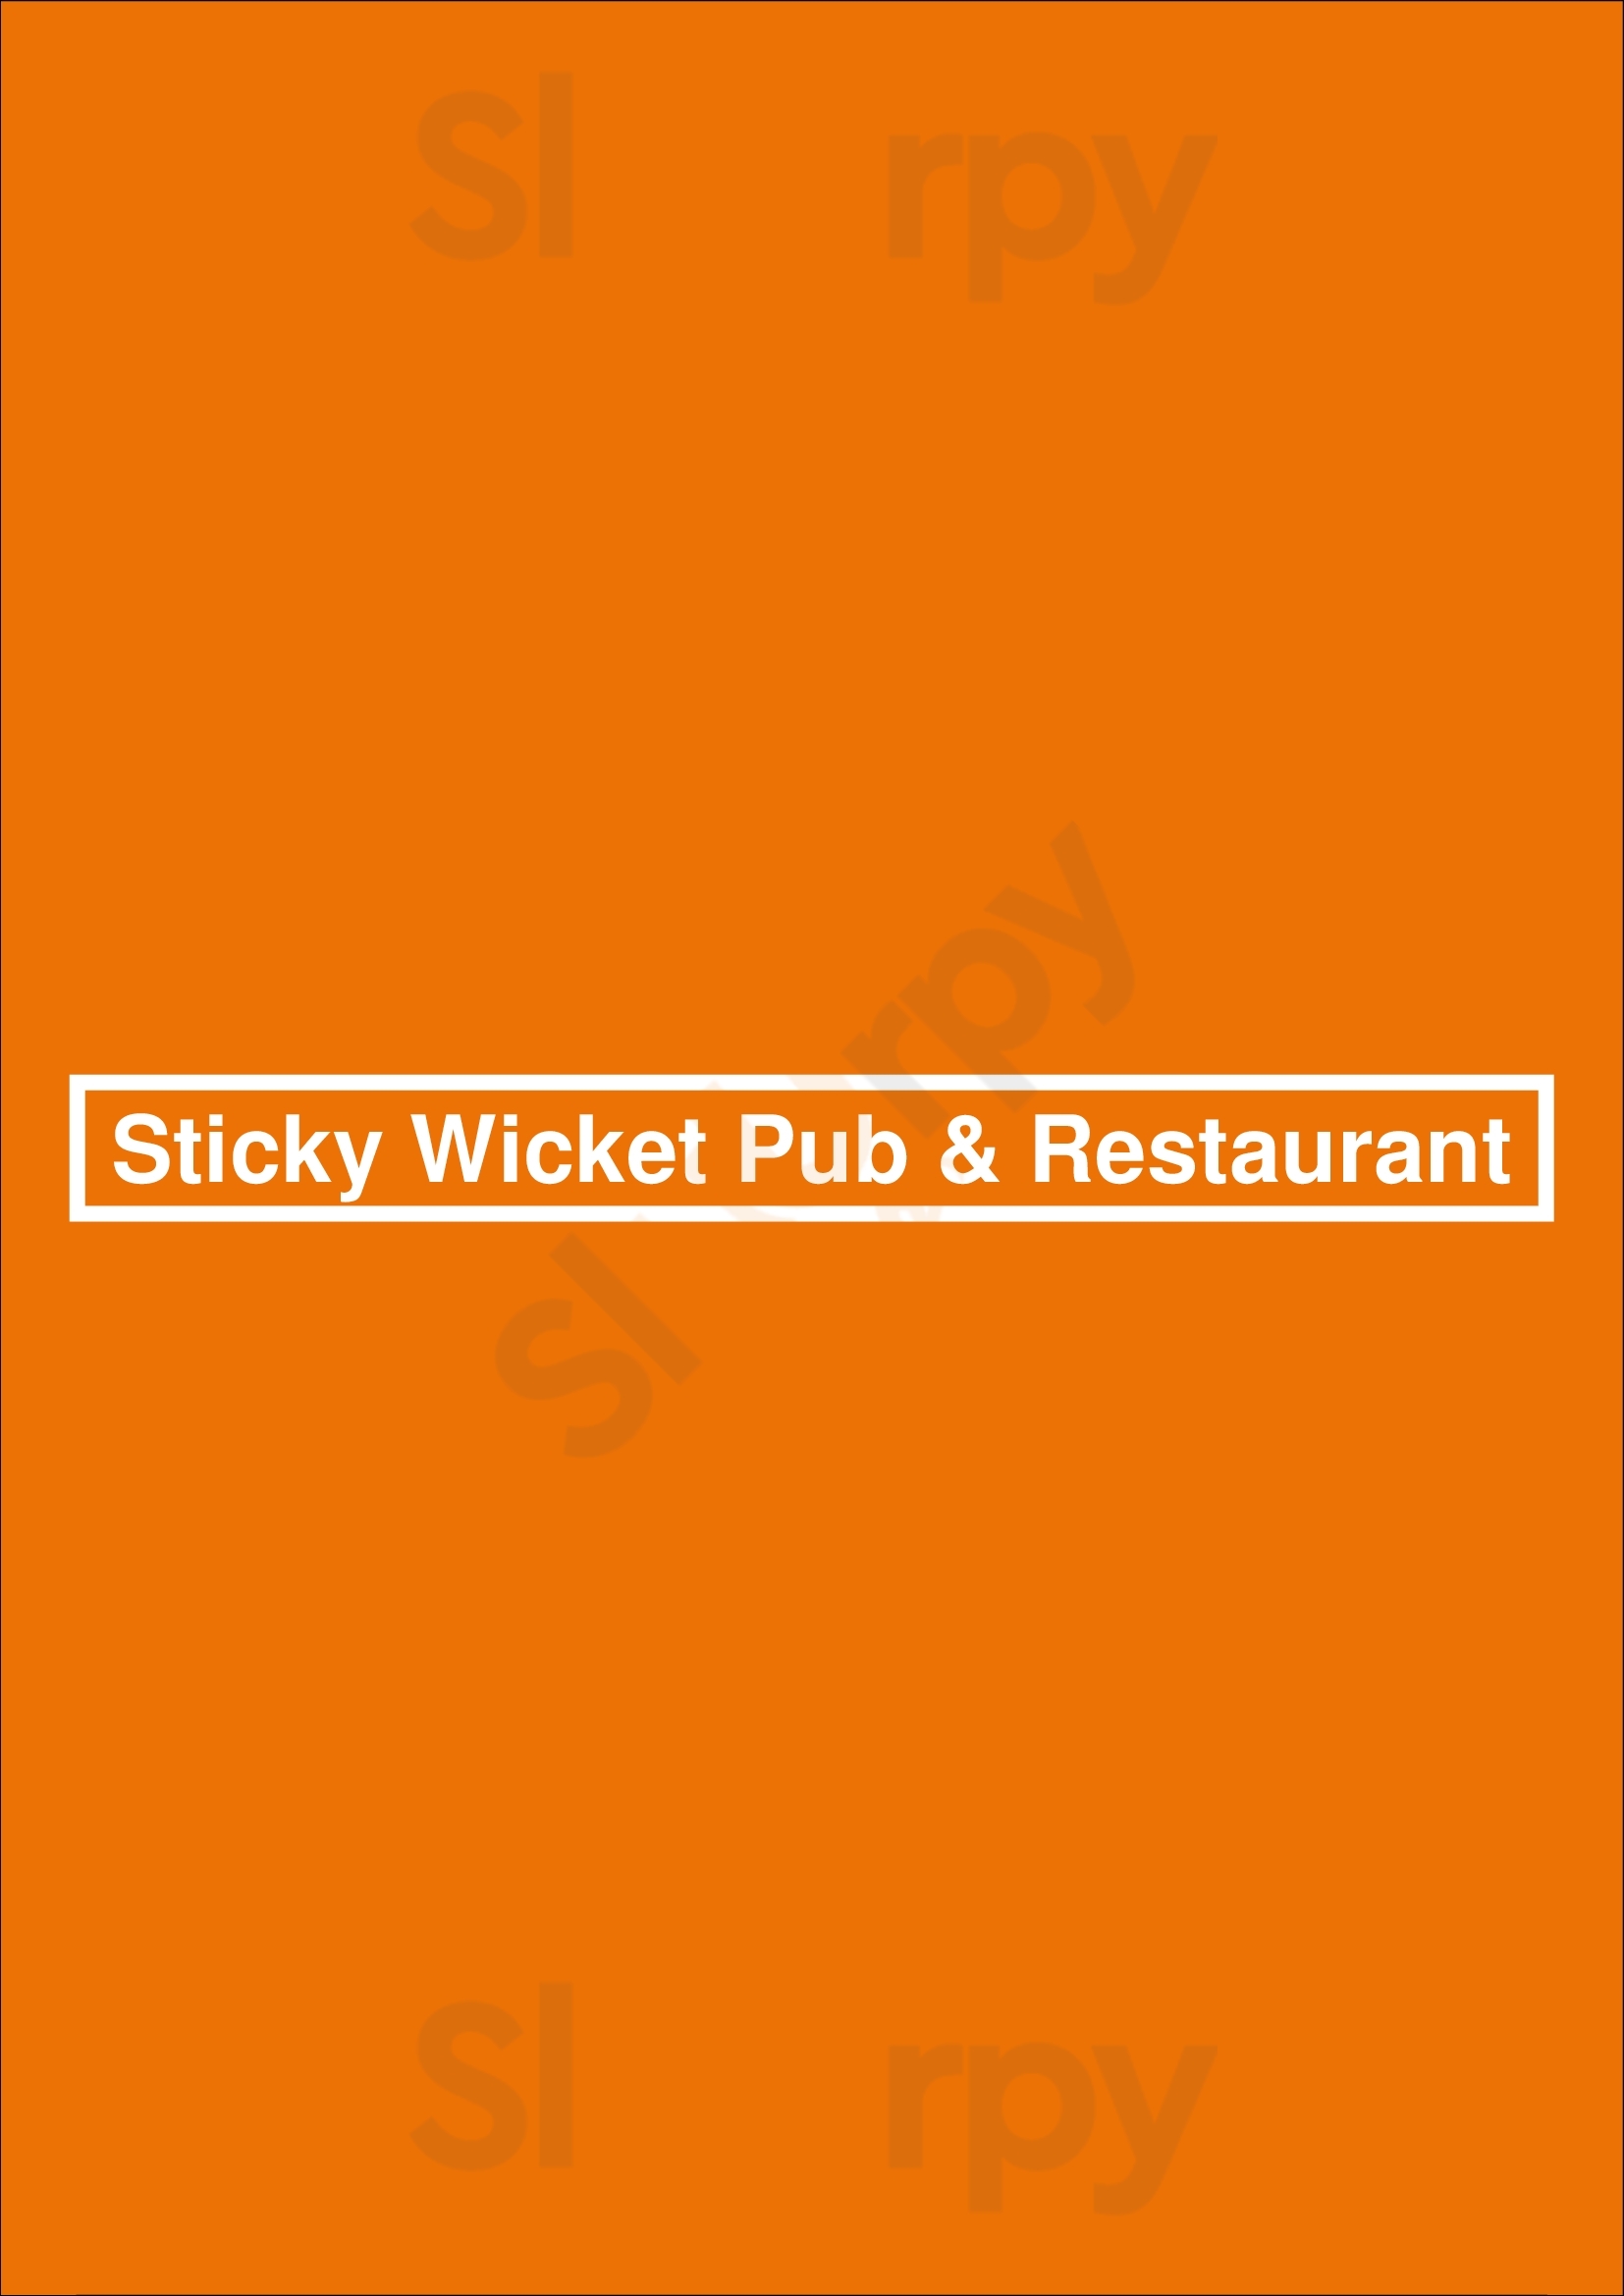 Sticky Wicket Pub & Restaurant Victoria Menu - 1